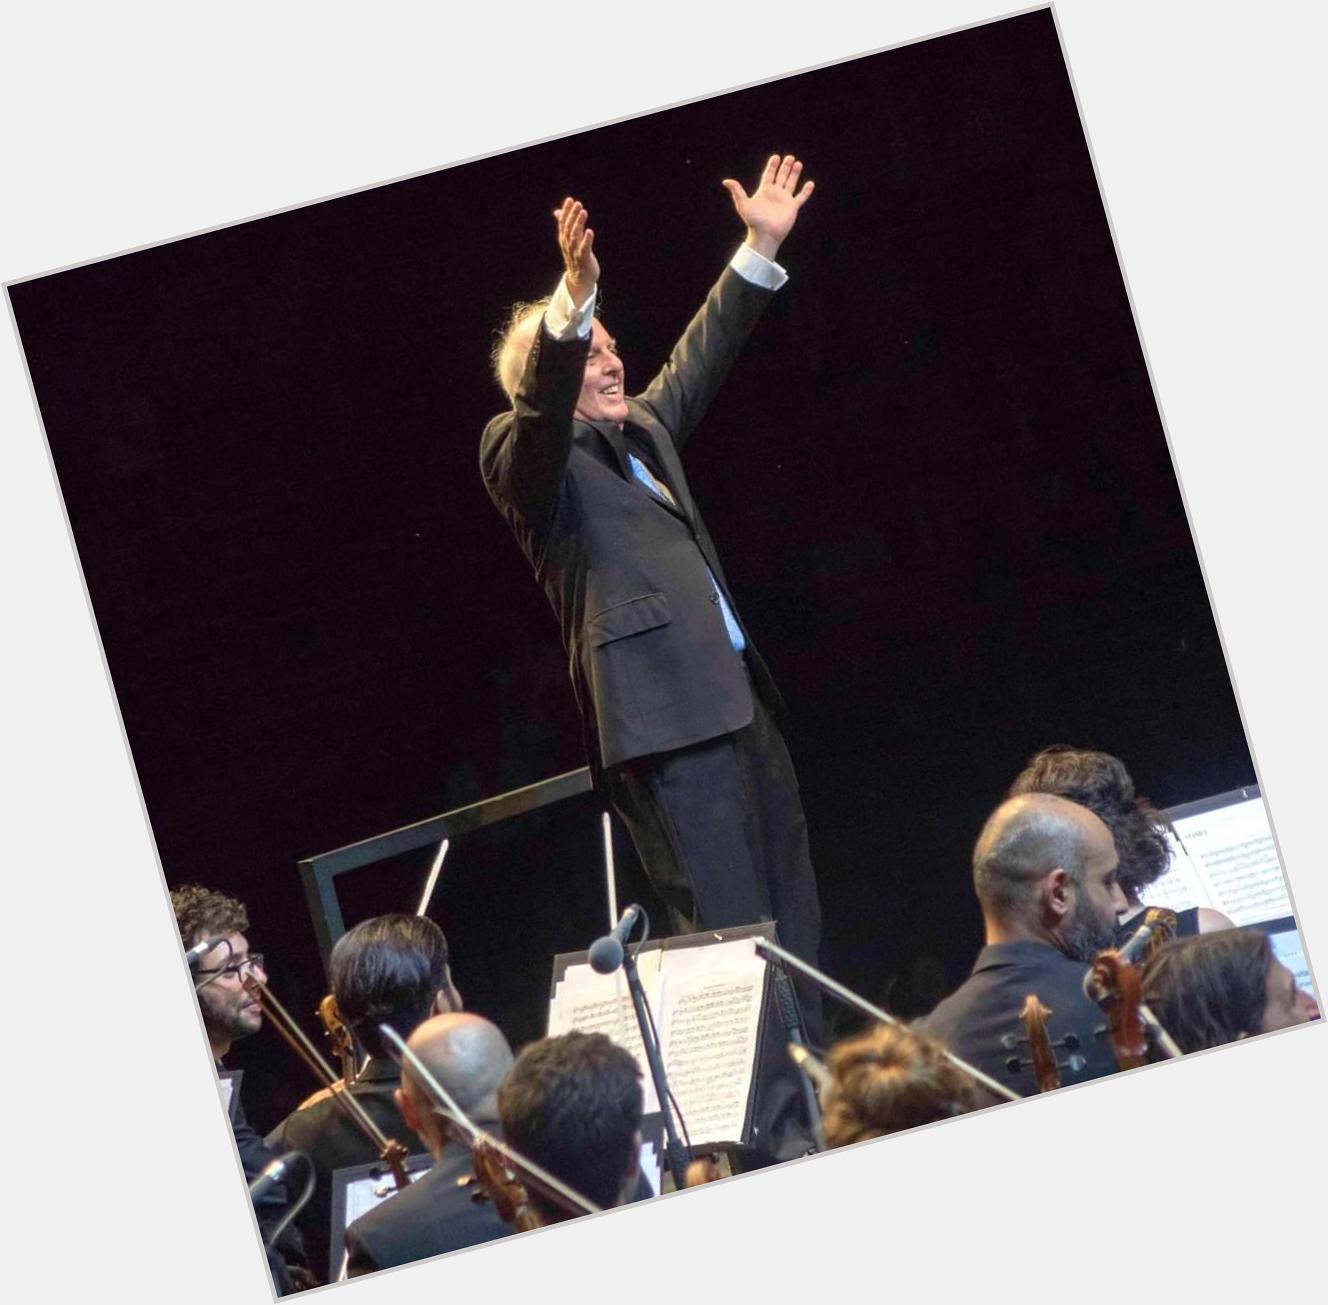 Wishing Maestro Daniel Barenboim a very happy birthday today! Photo by Manuel Vaca 